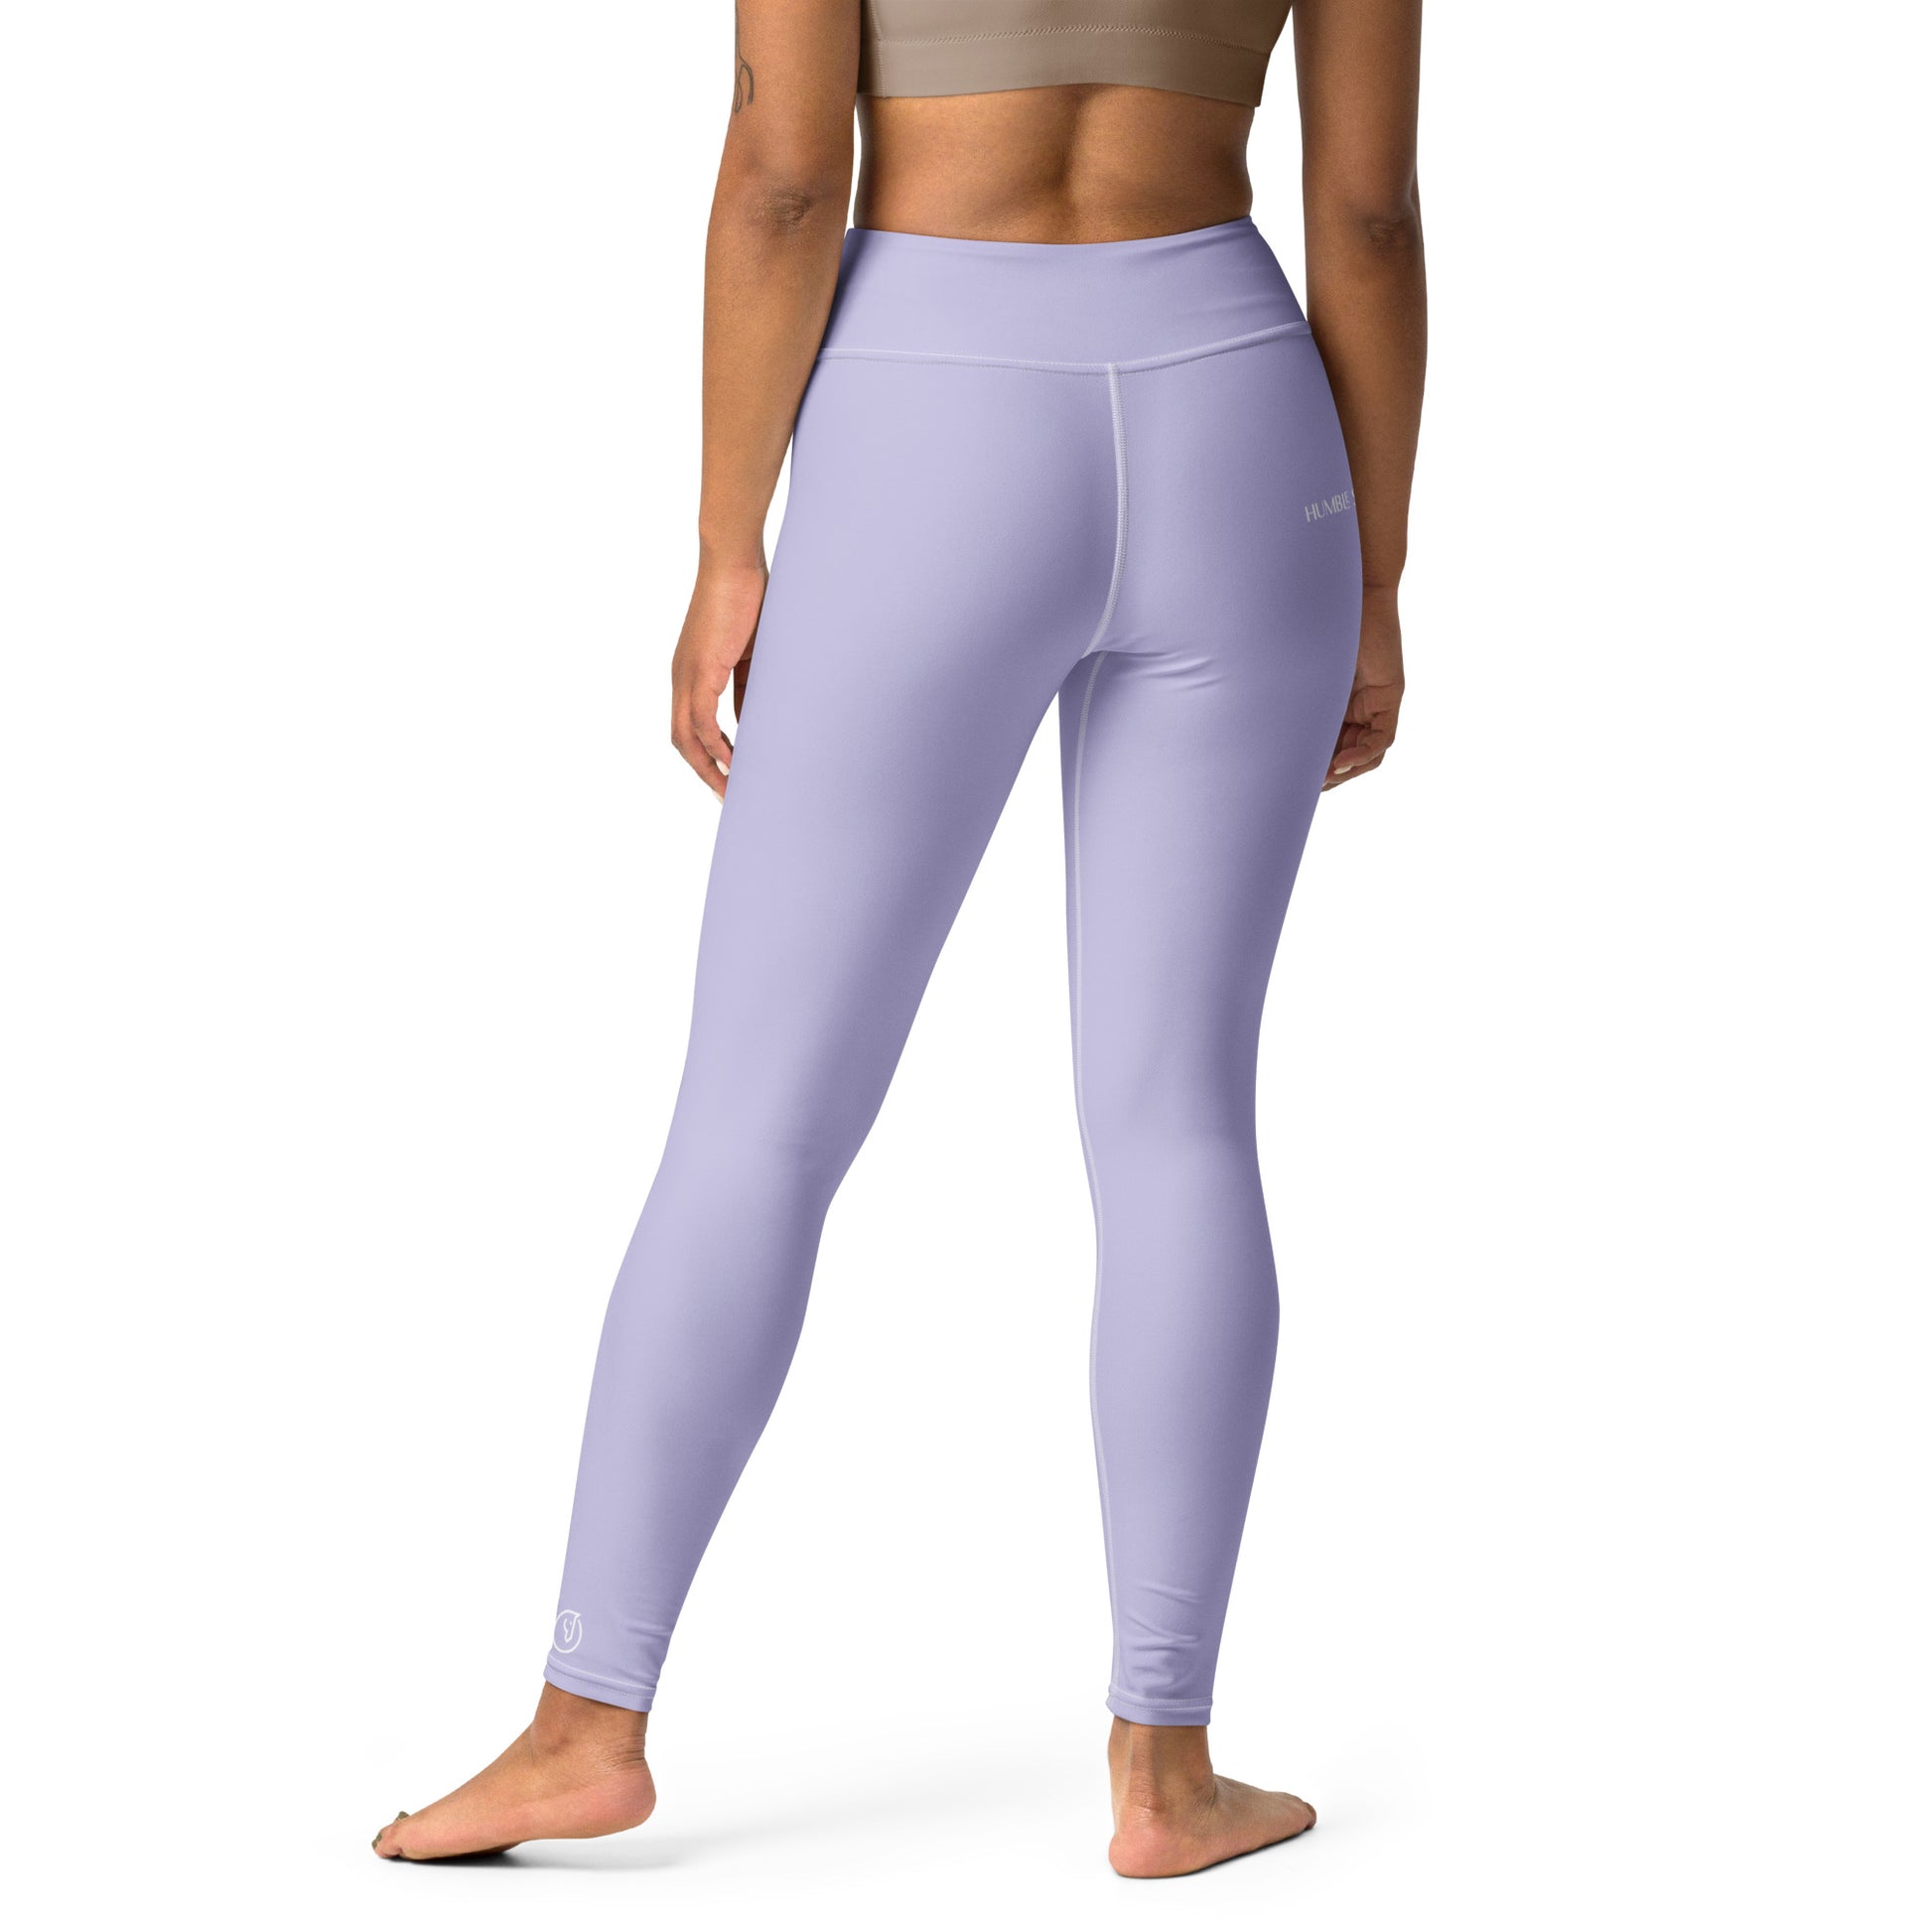 Women’s color match leggings, Humble Sportswear, women’s workout leggings, yoga leggings, gym leggings